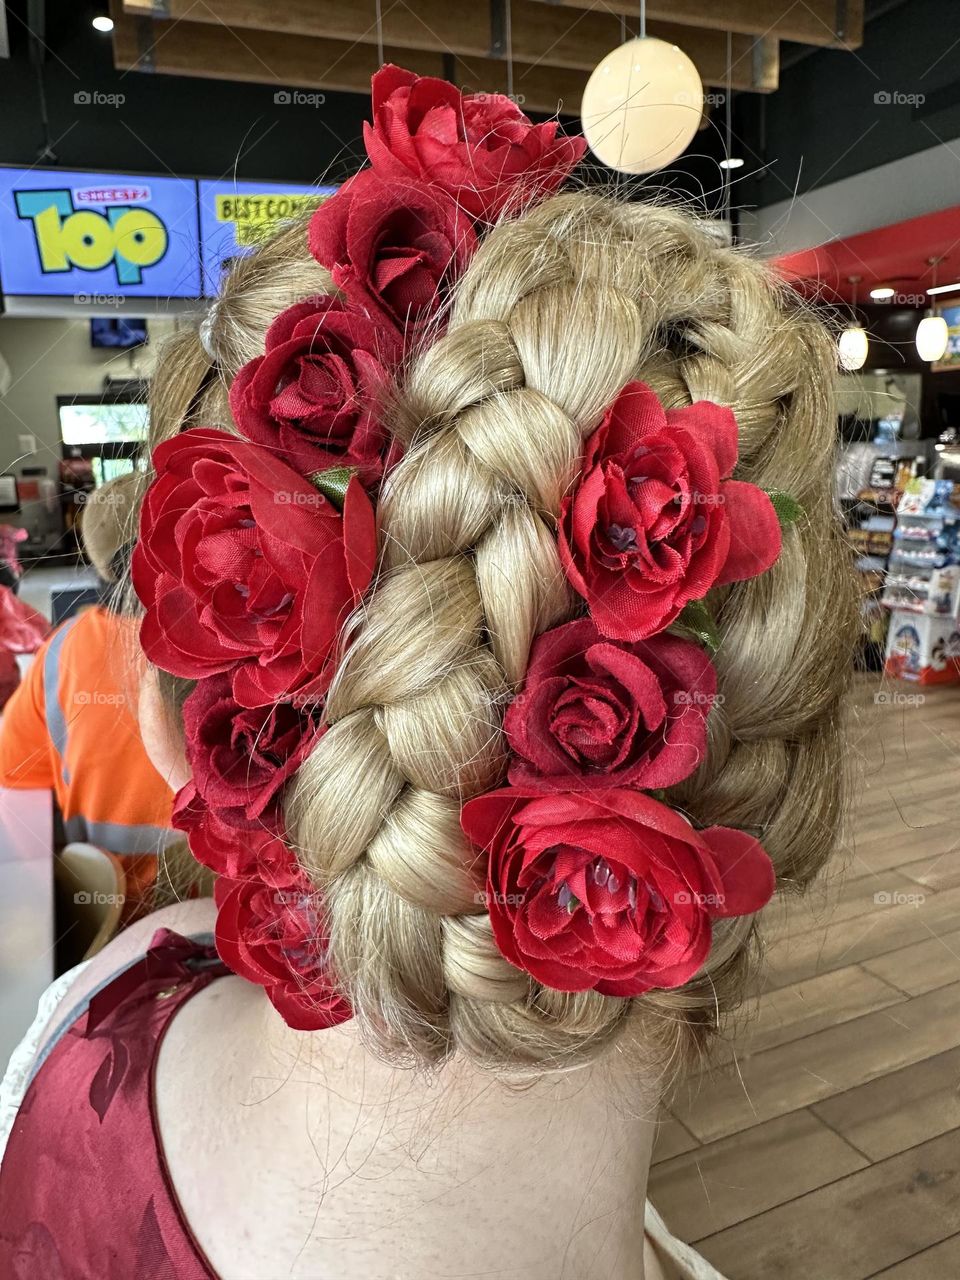 Blonde braid and roses